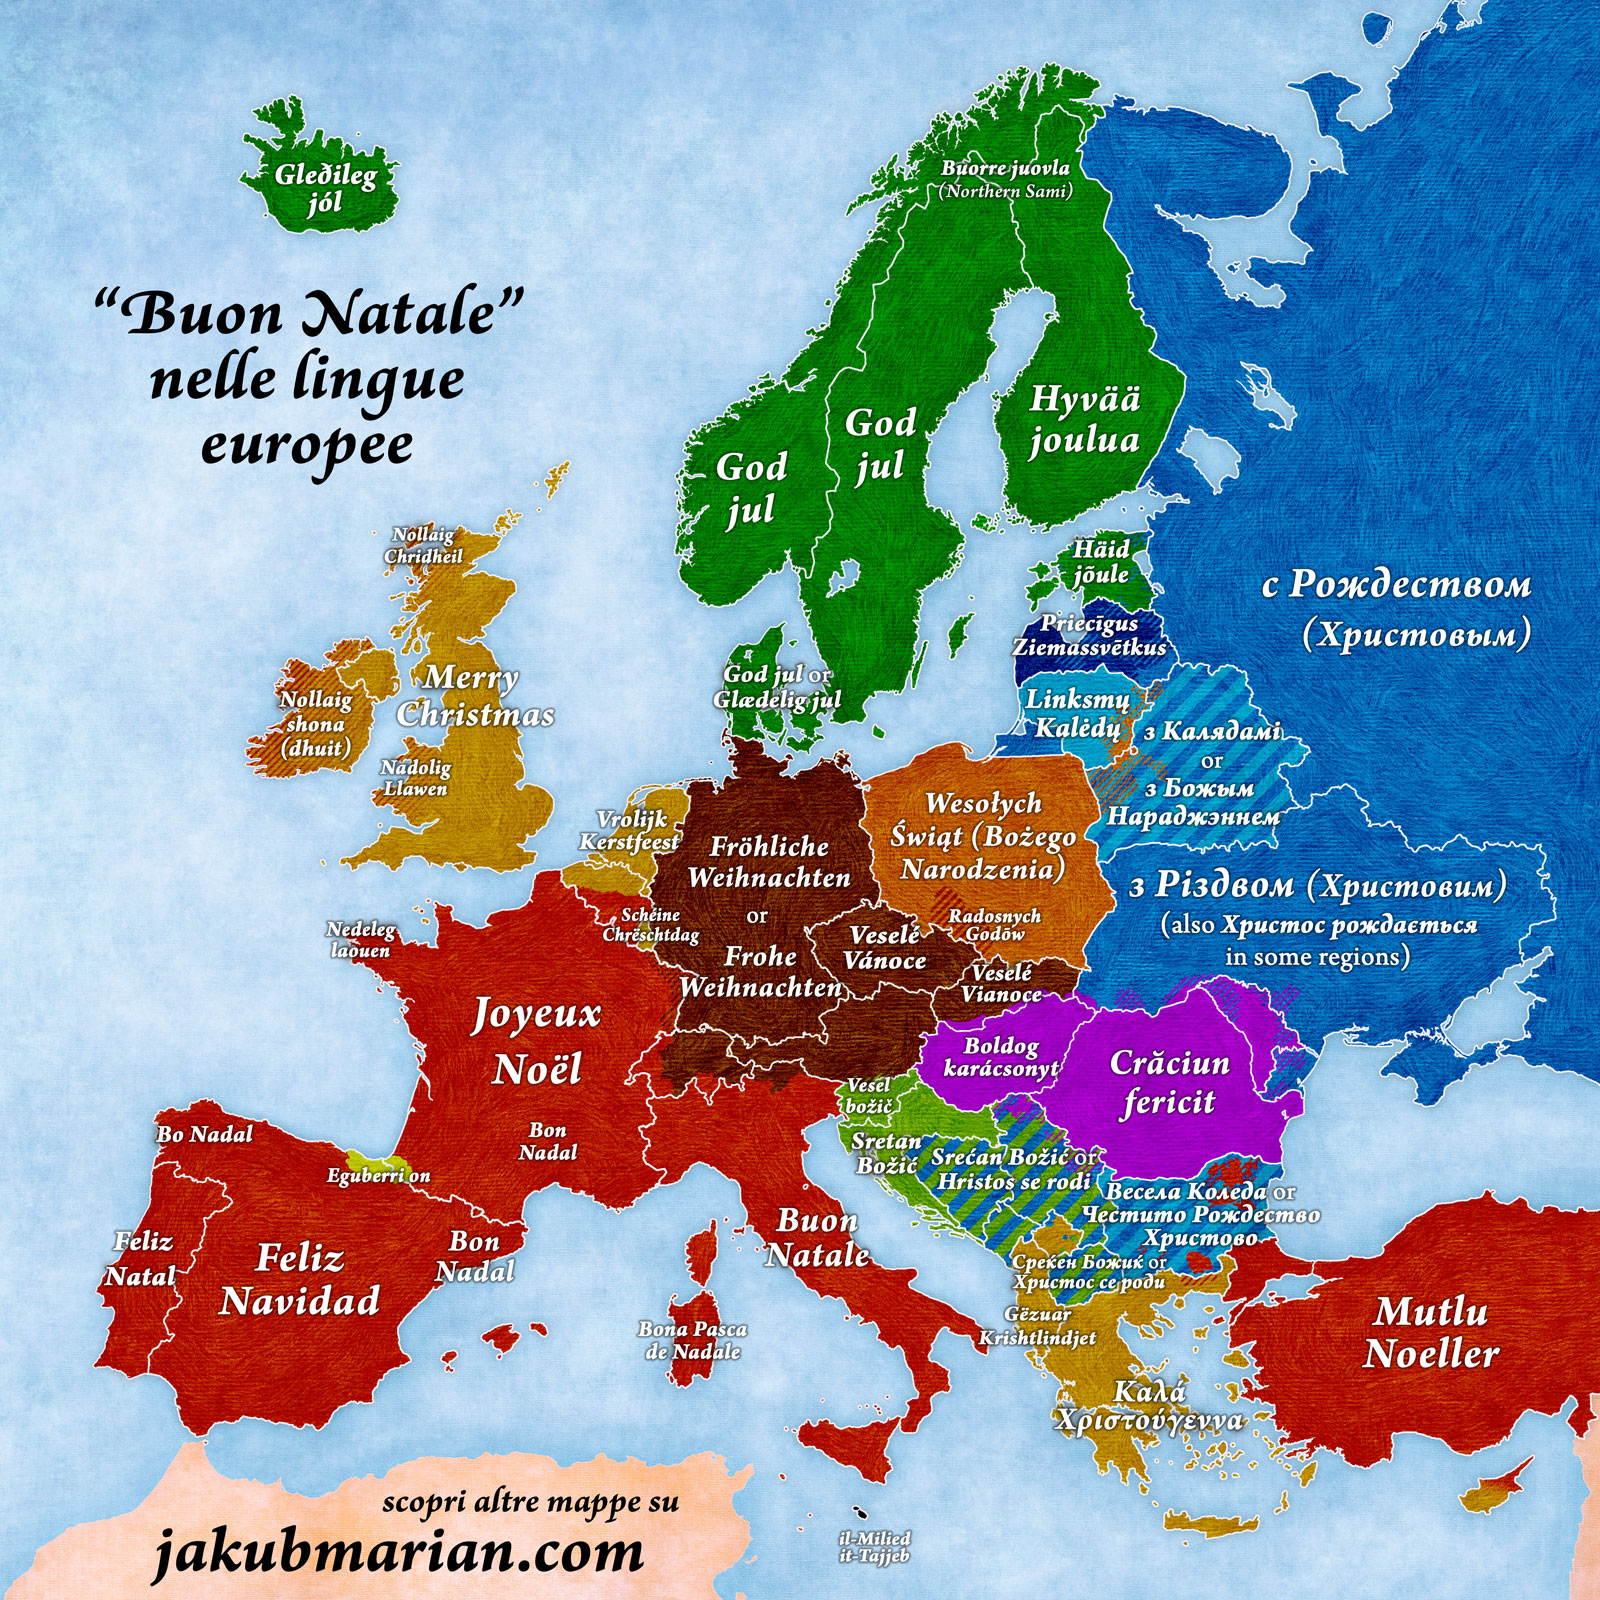 Buon natale nelle lingue europee